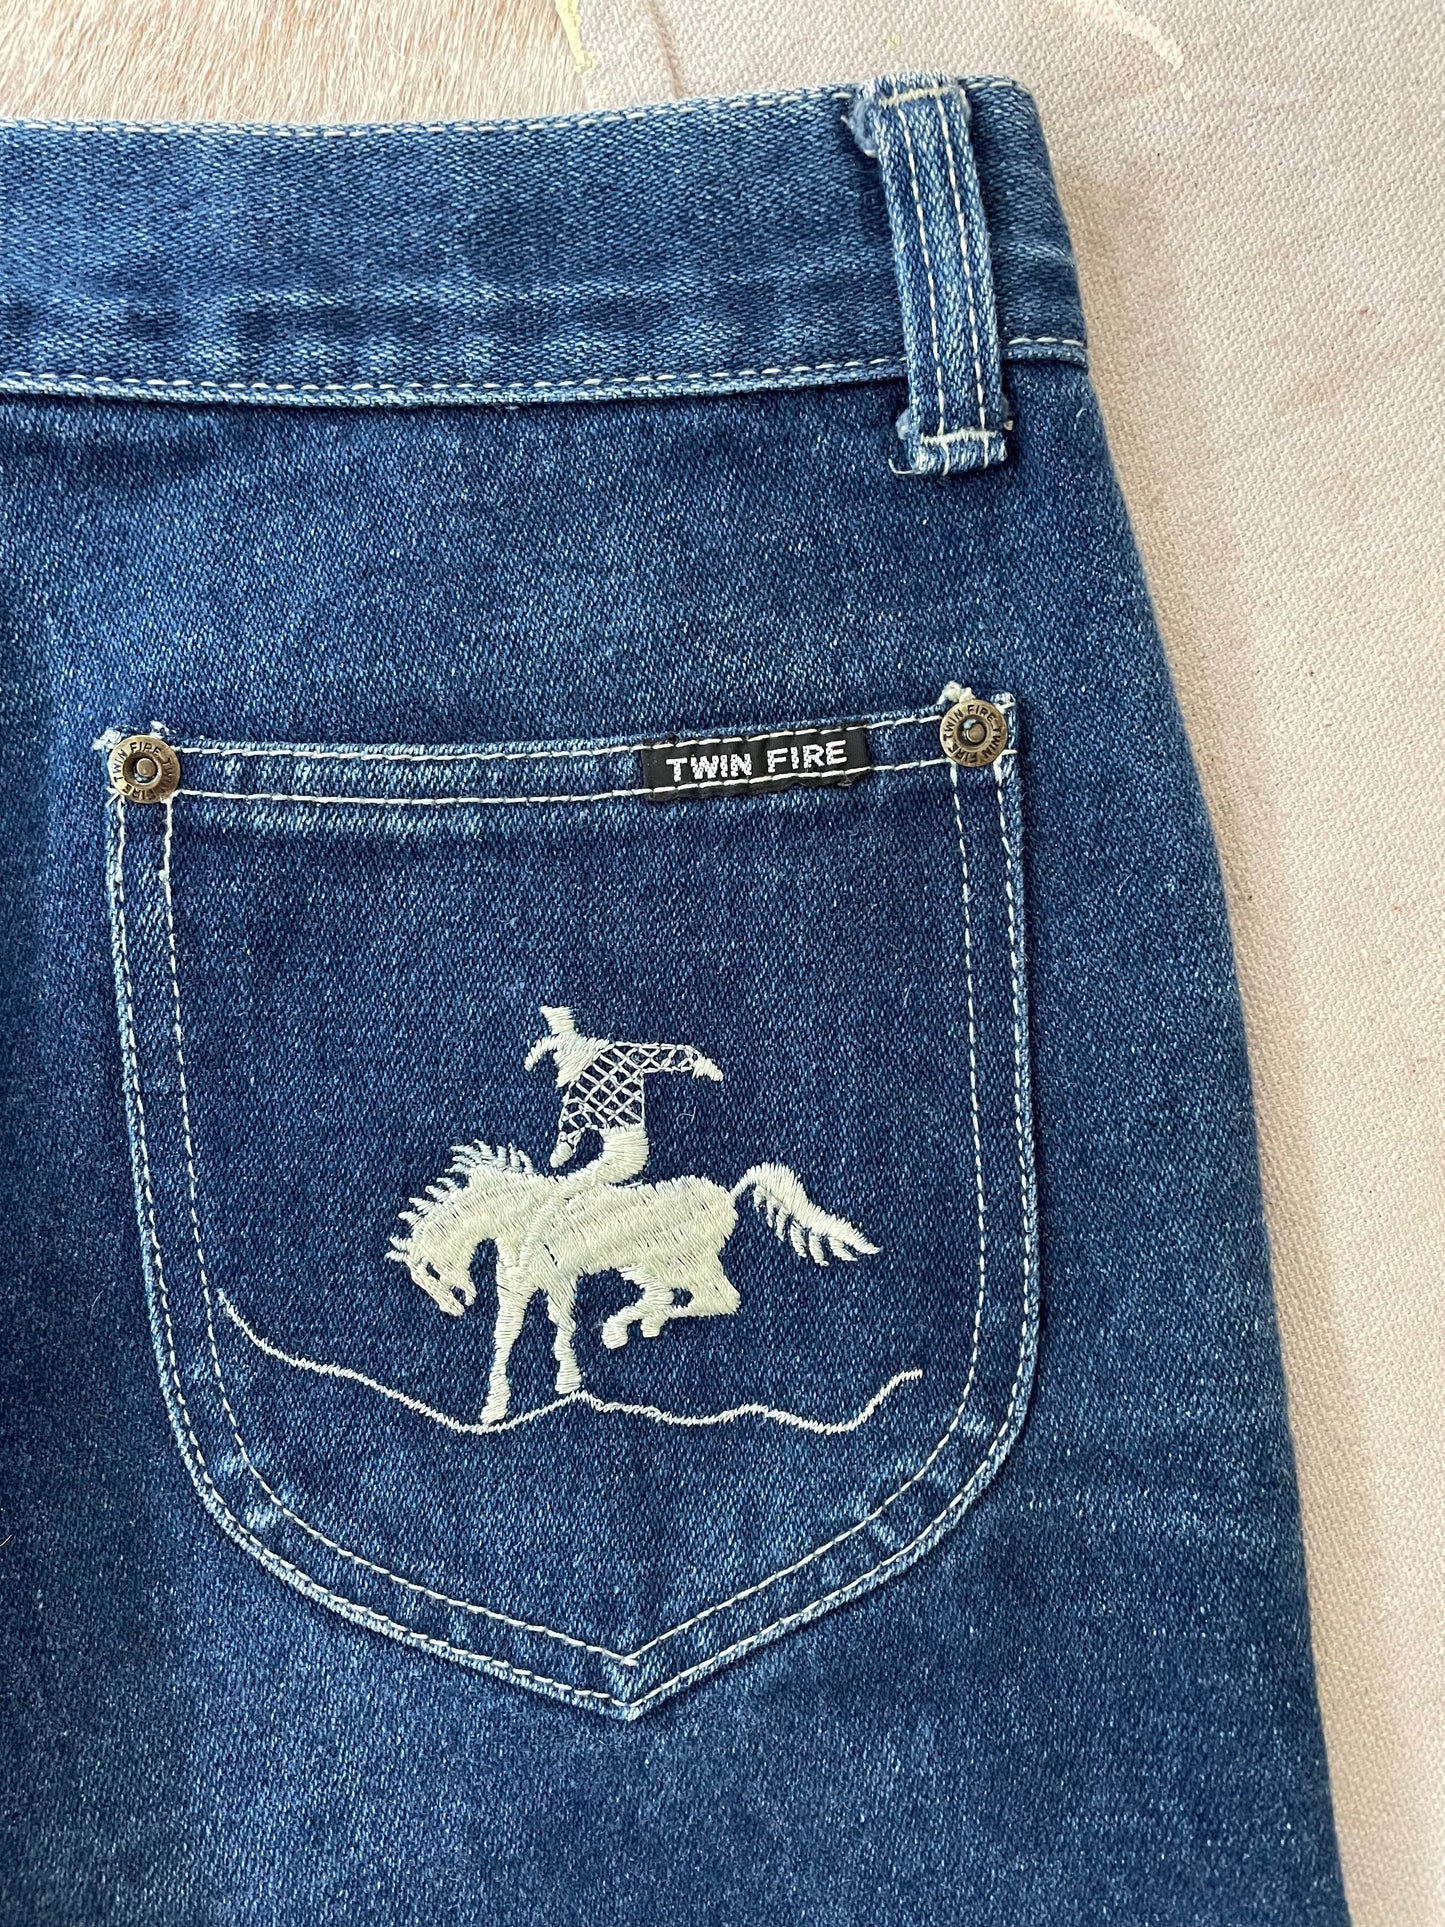 70s Western Theme Cut-off Jean Shorts